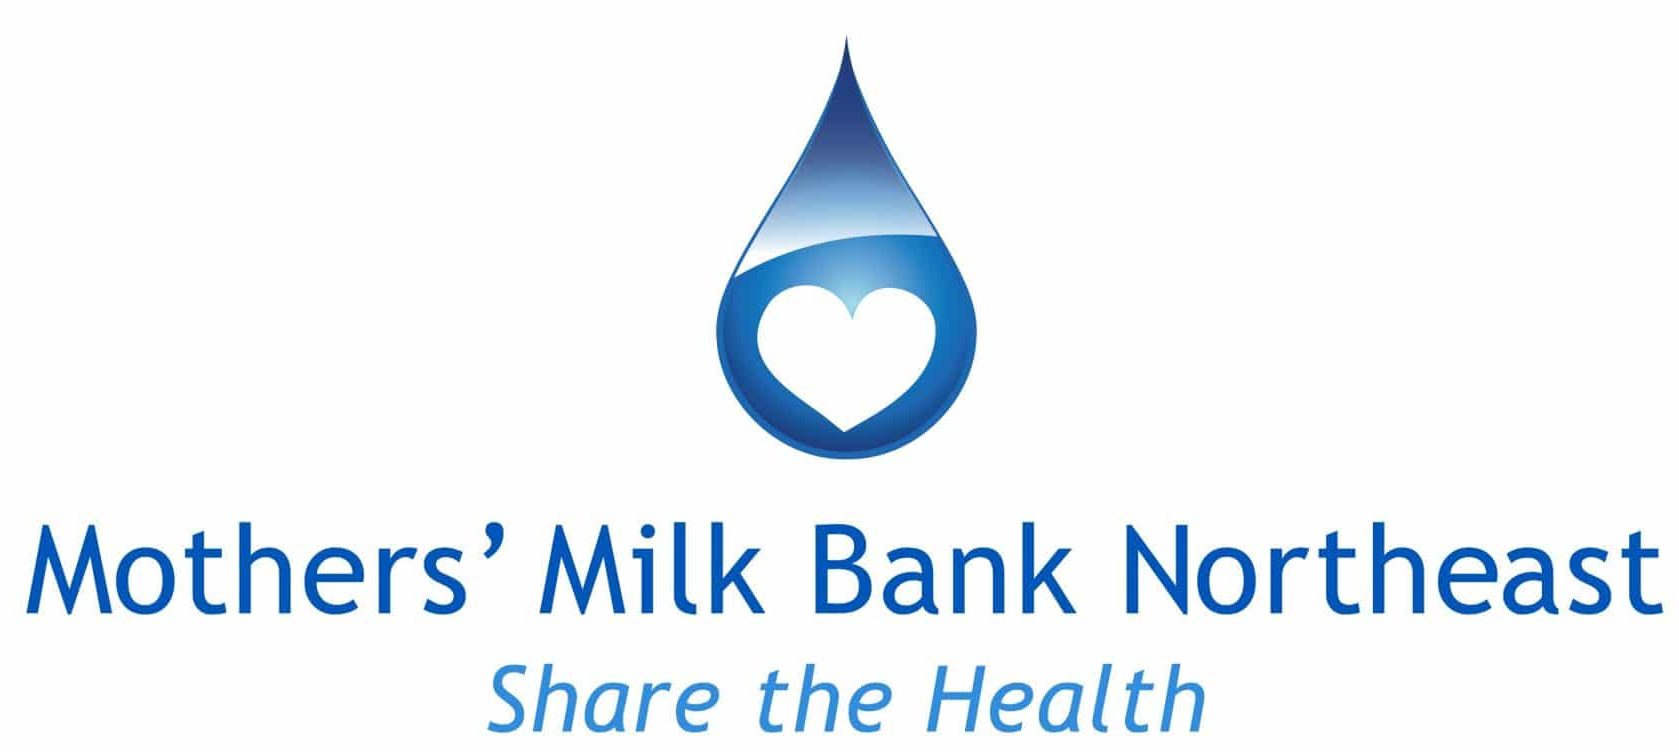 Mothers’ Milk Bank Northeast Logo